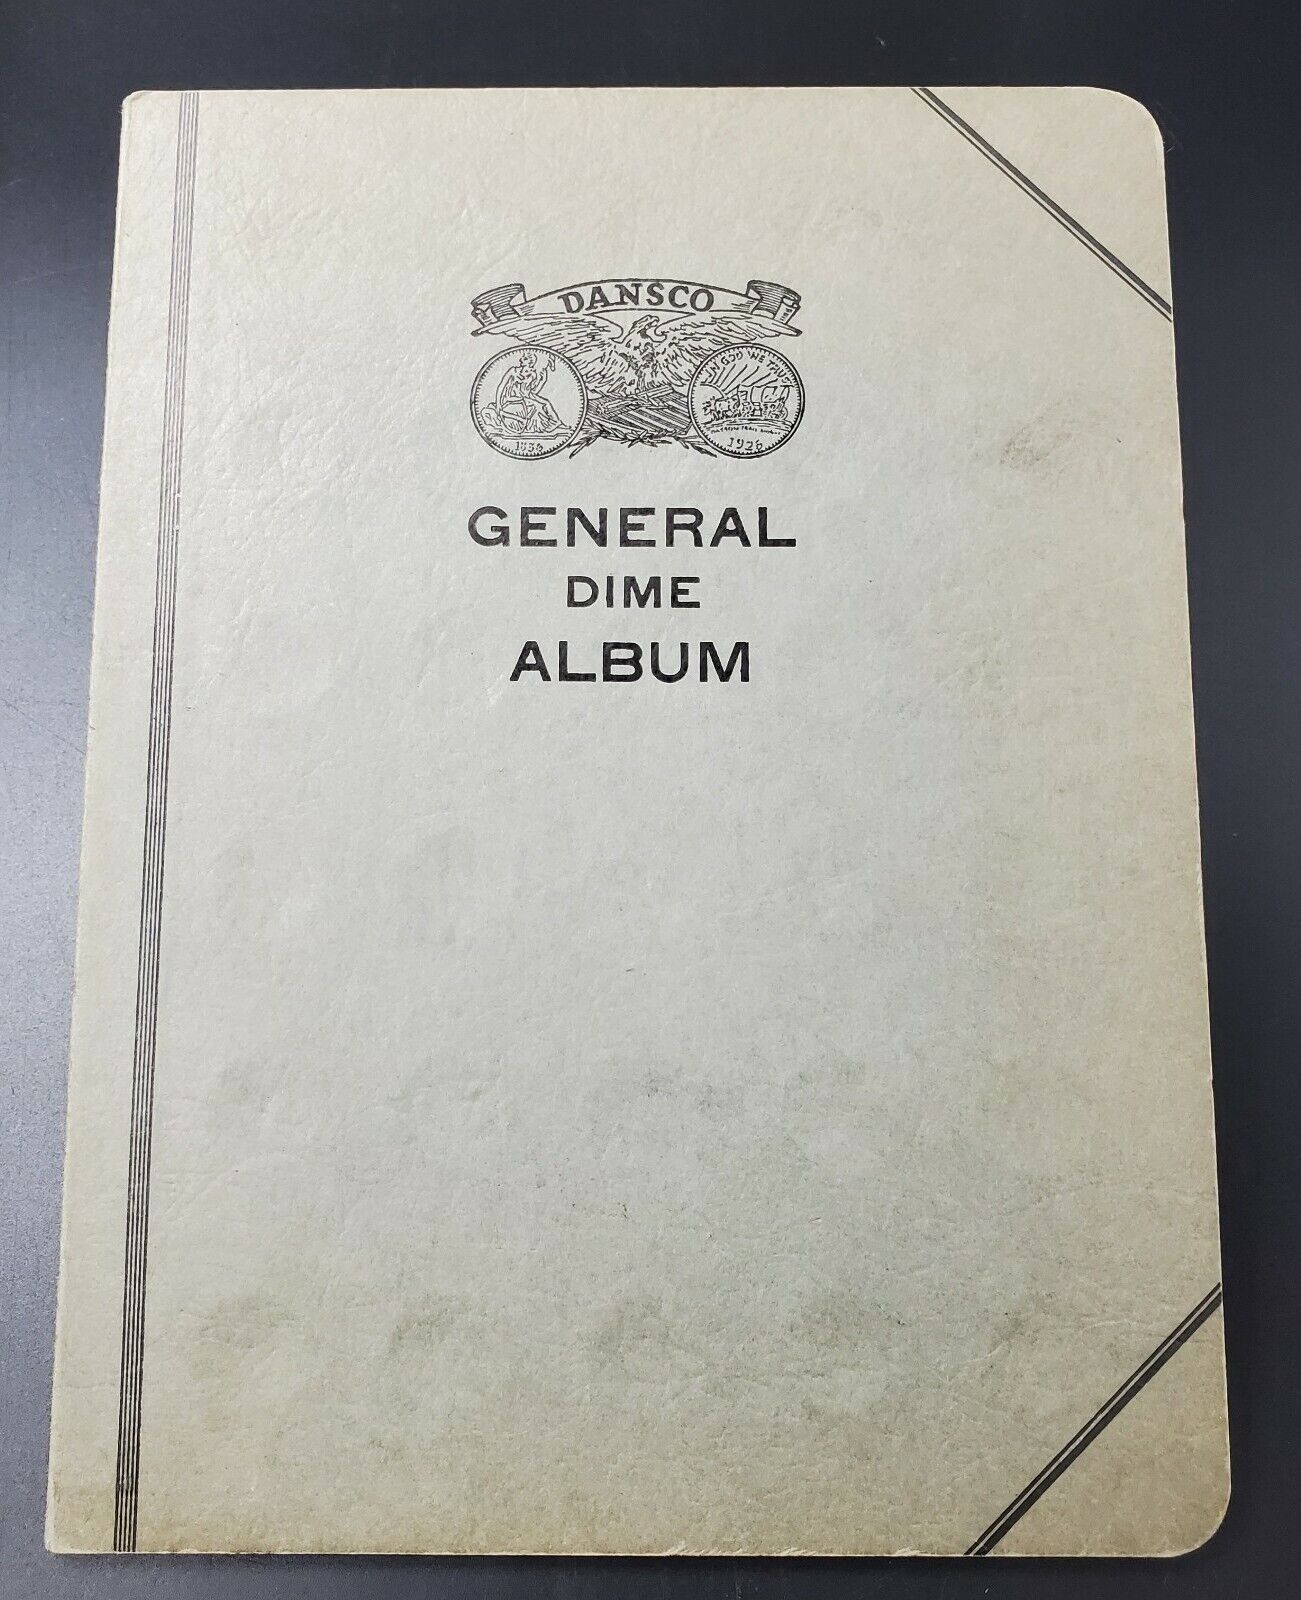 Antique Dansco General Dime Album Folder Sample with Catalog order Form - Rare